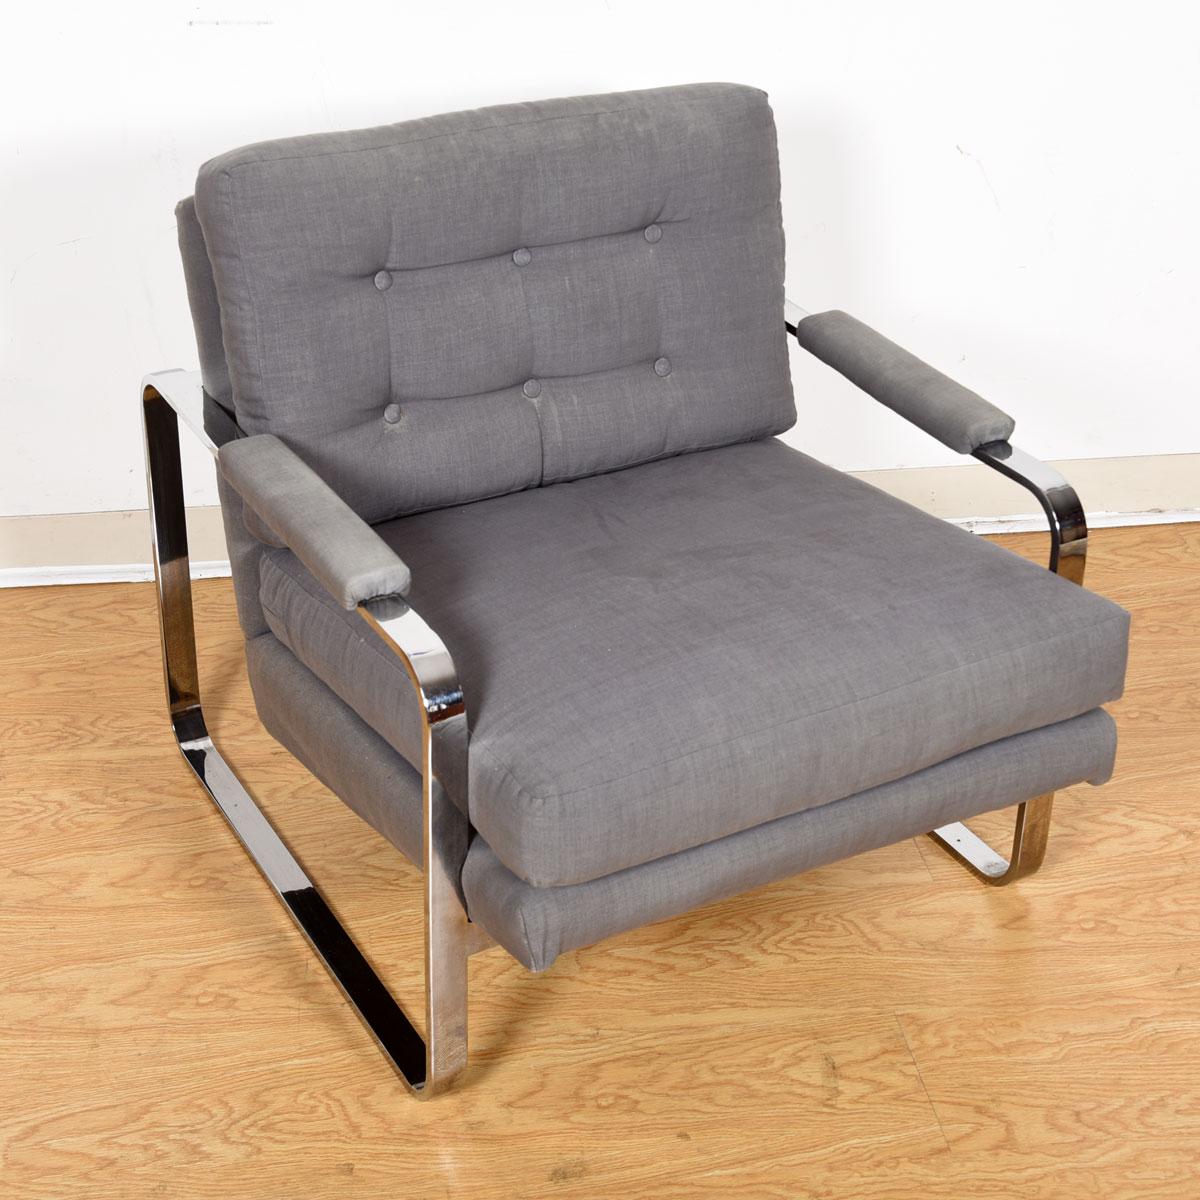 American Chrome Milo Baughman Lounge Chair For Sale